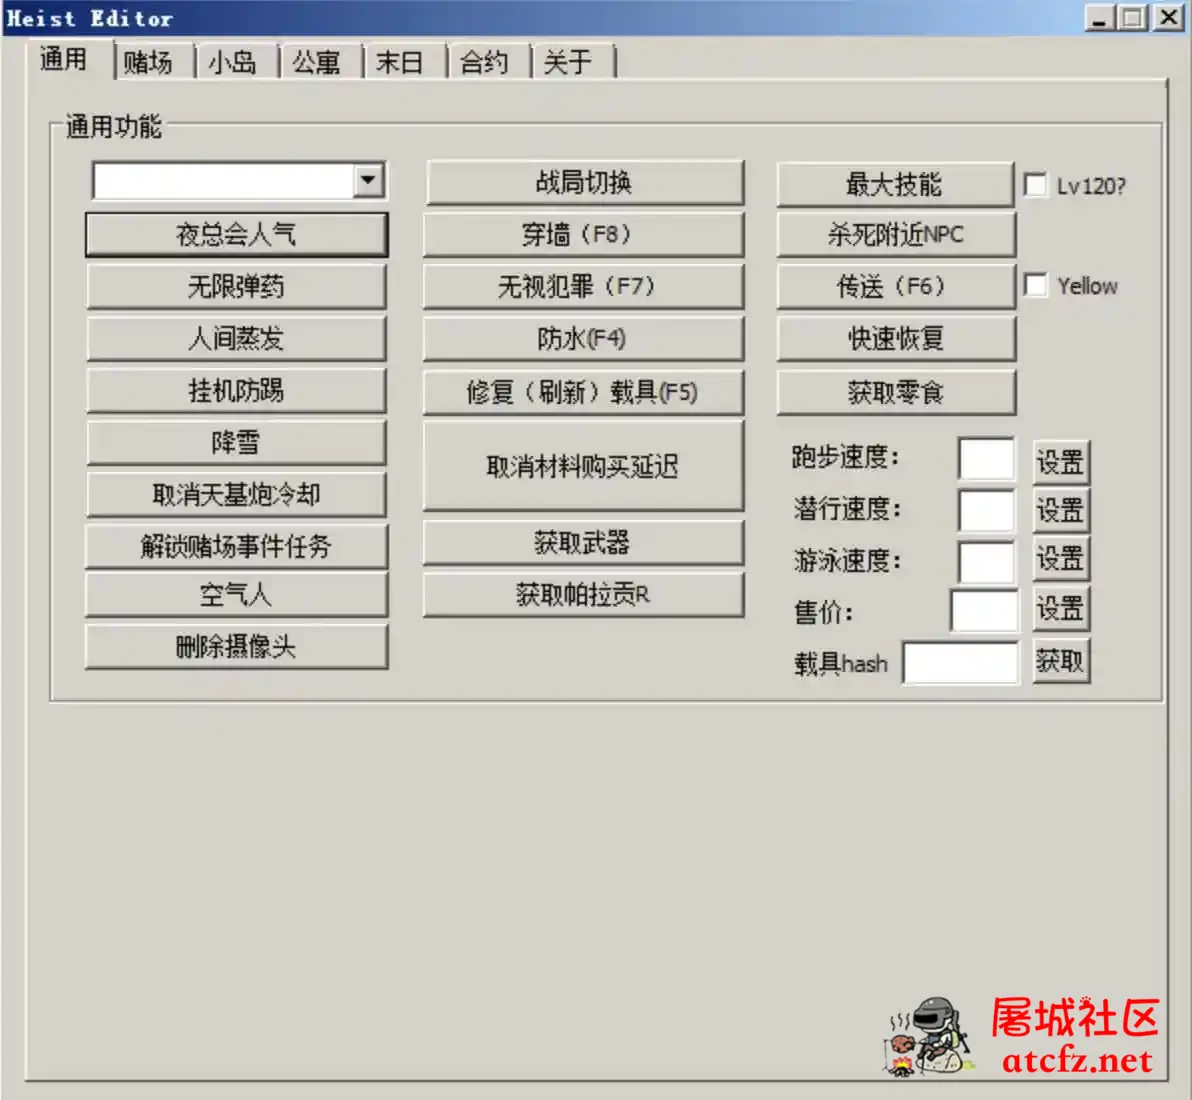 GTA5 Heist Editor外部抢劫编辑器 v3.5.7 屠城辅助网www.tcfz1.com3654